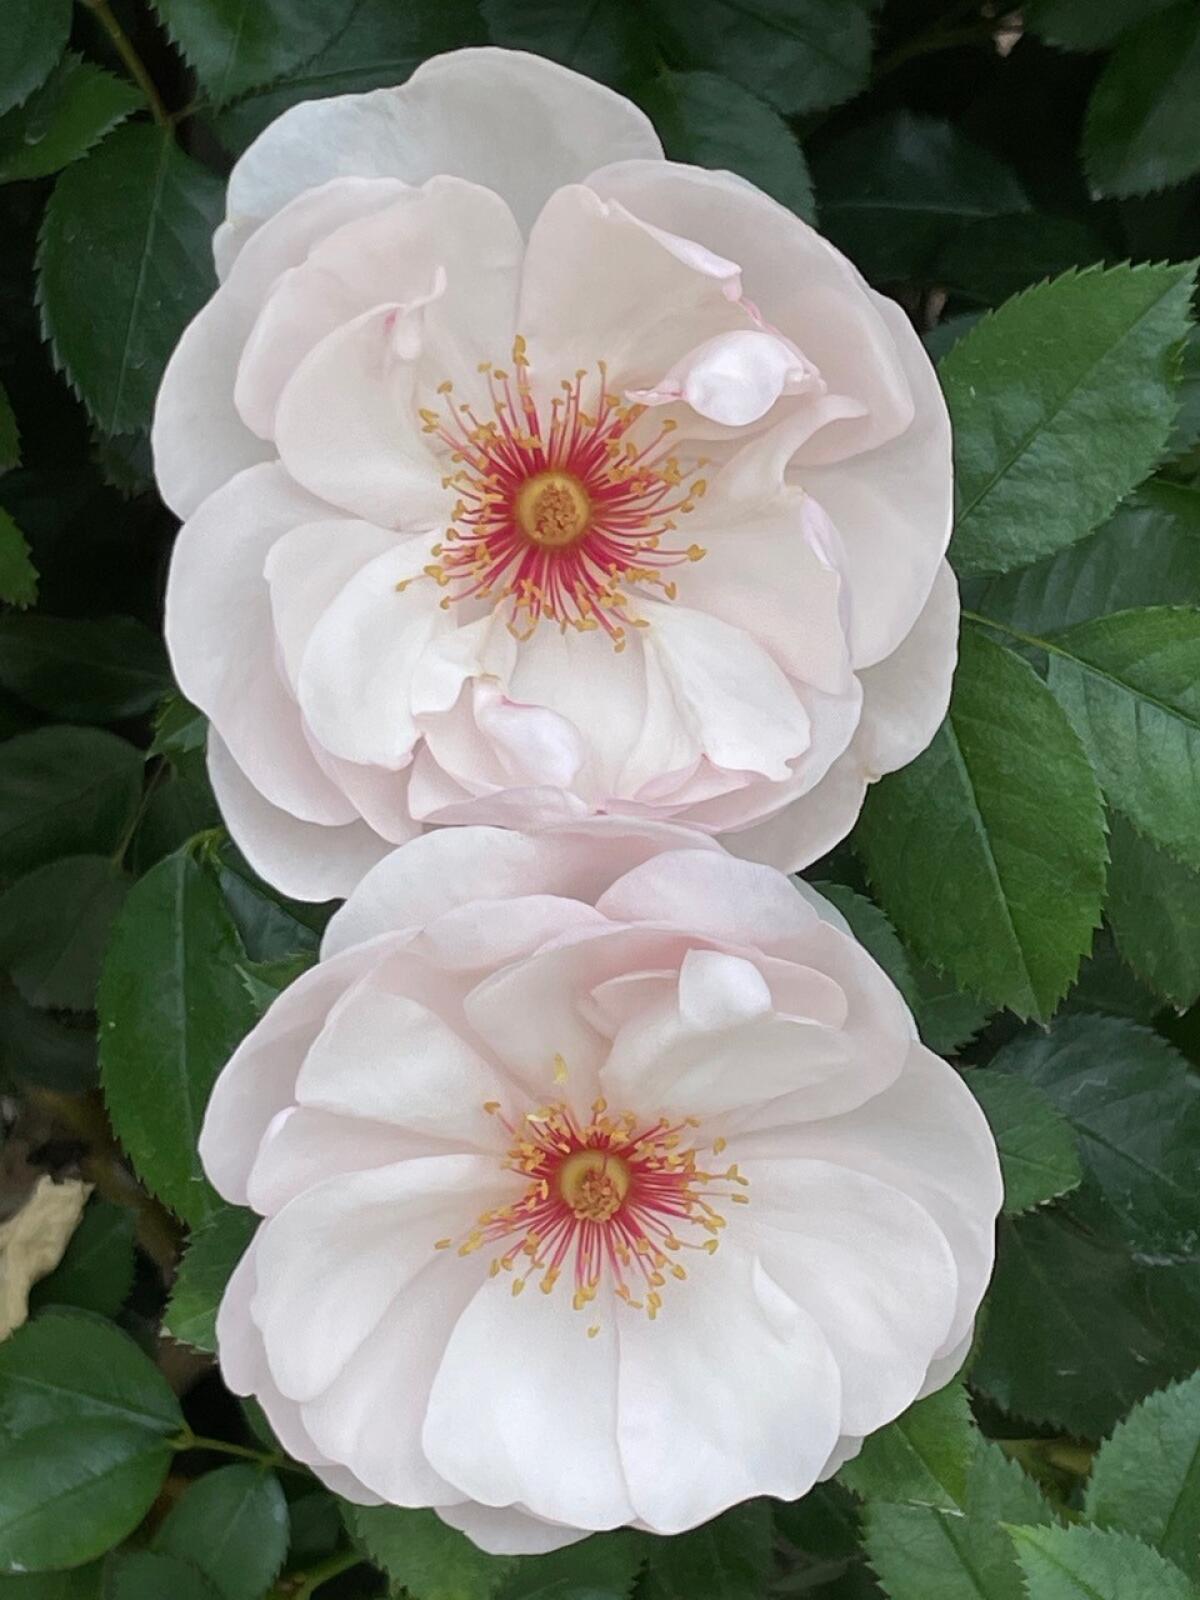 ‘Jacqueline du Pré’ has a semi-double bloom in white, with nine to 16 petals.